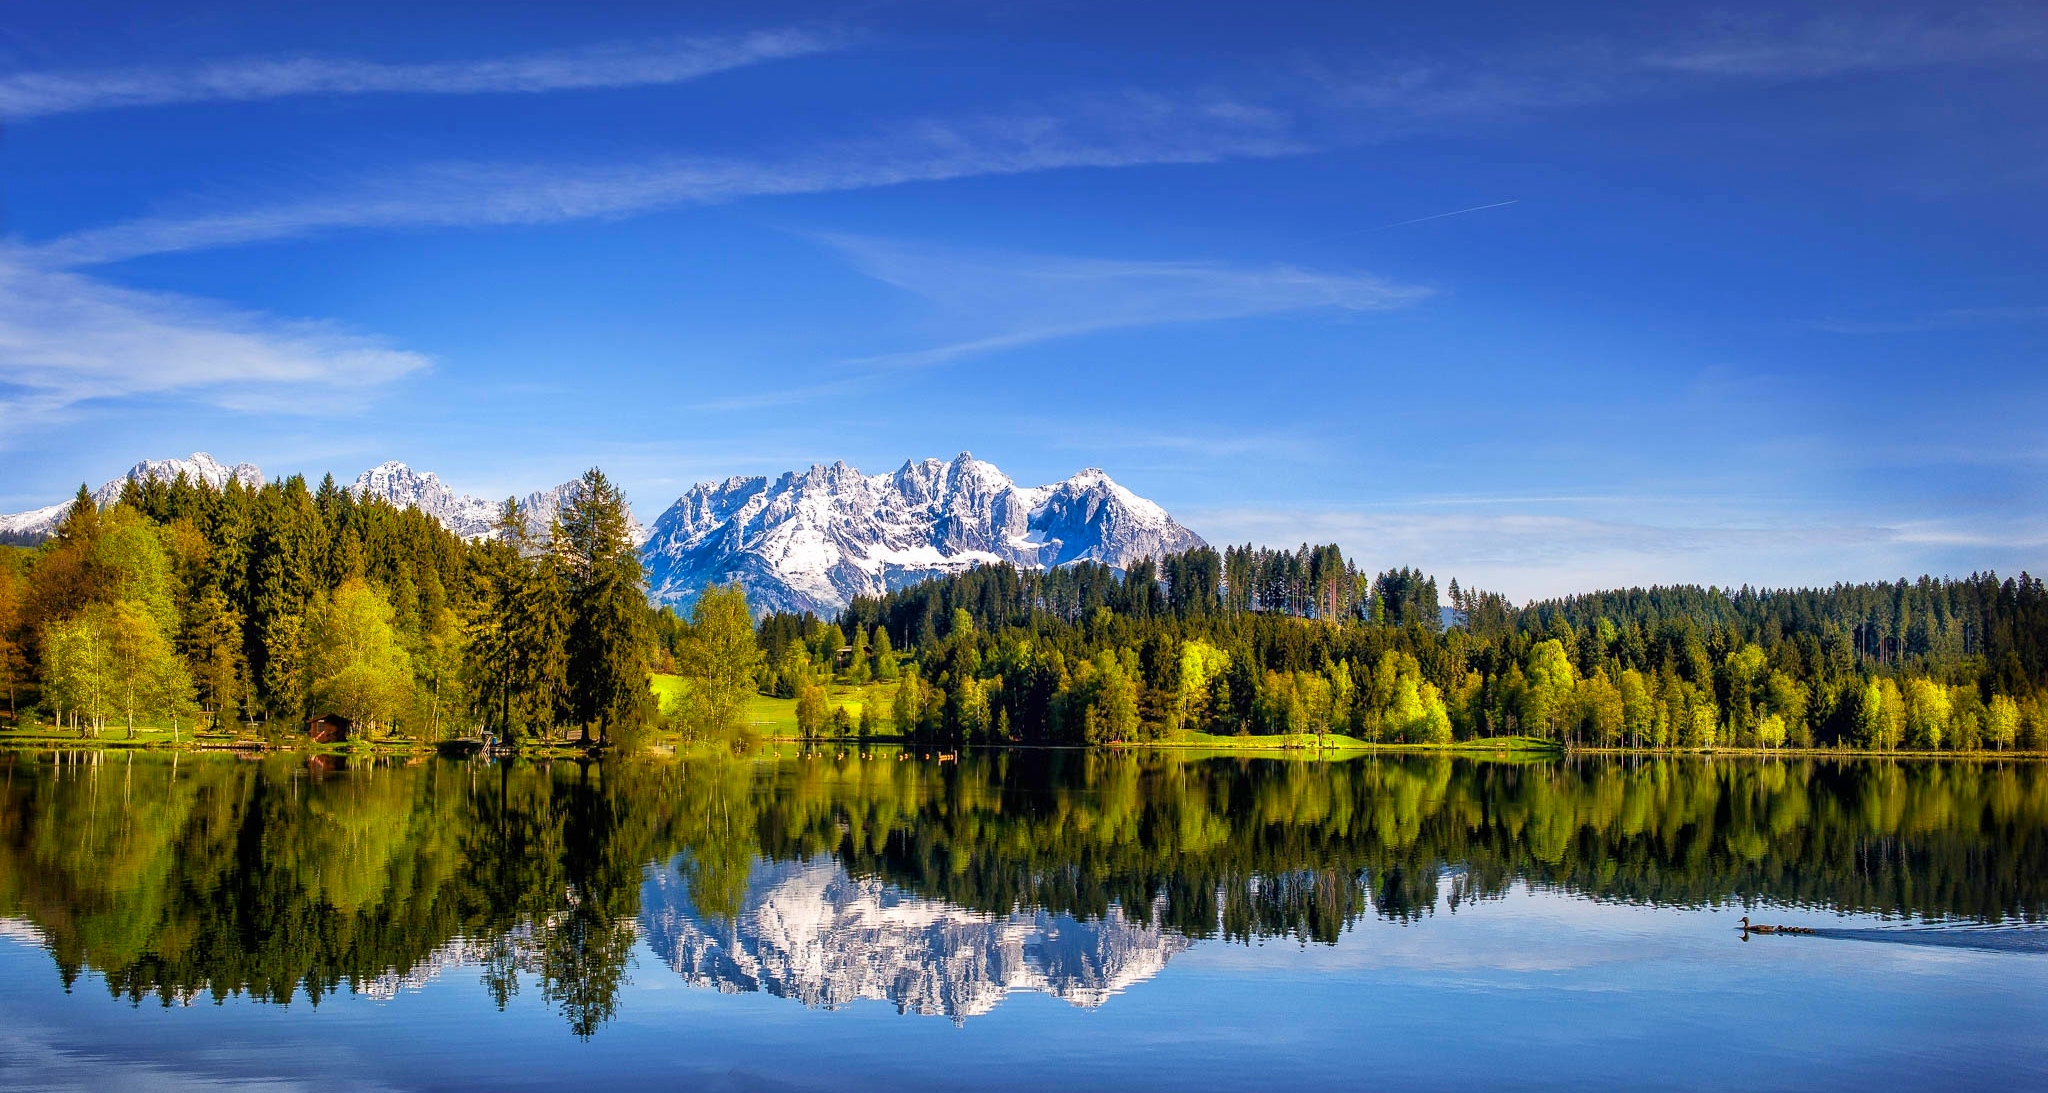 Austria, lake, blue sky, green grass, mountains, snowy peaks